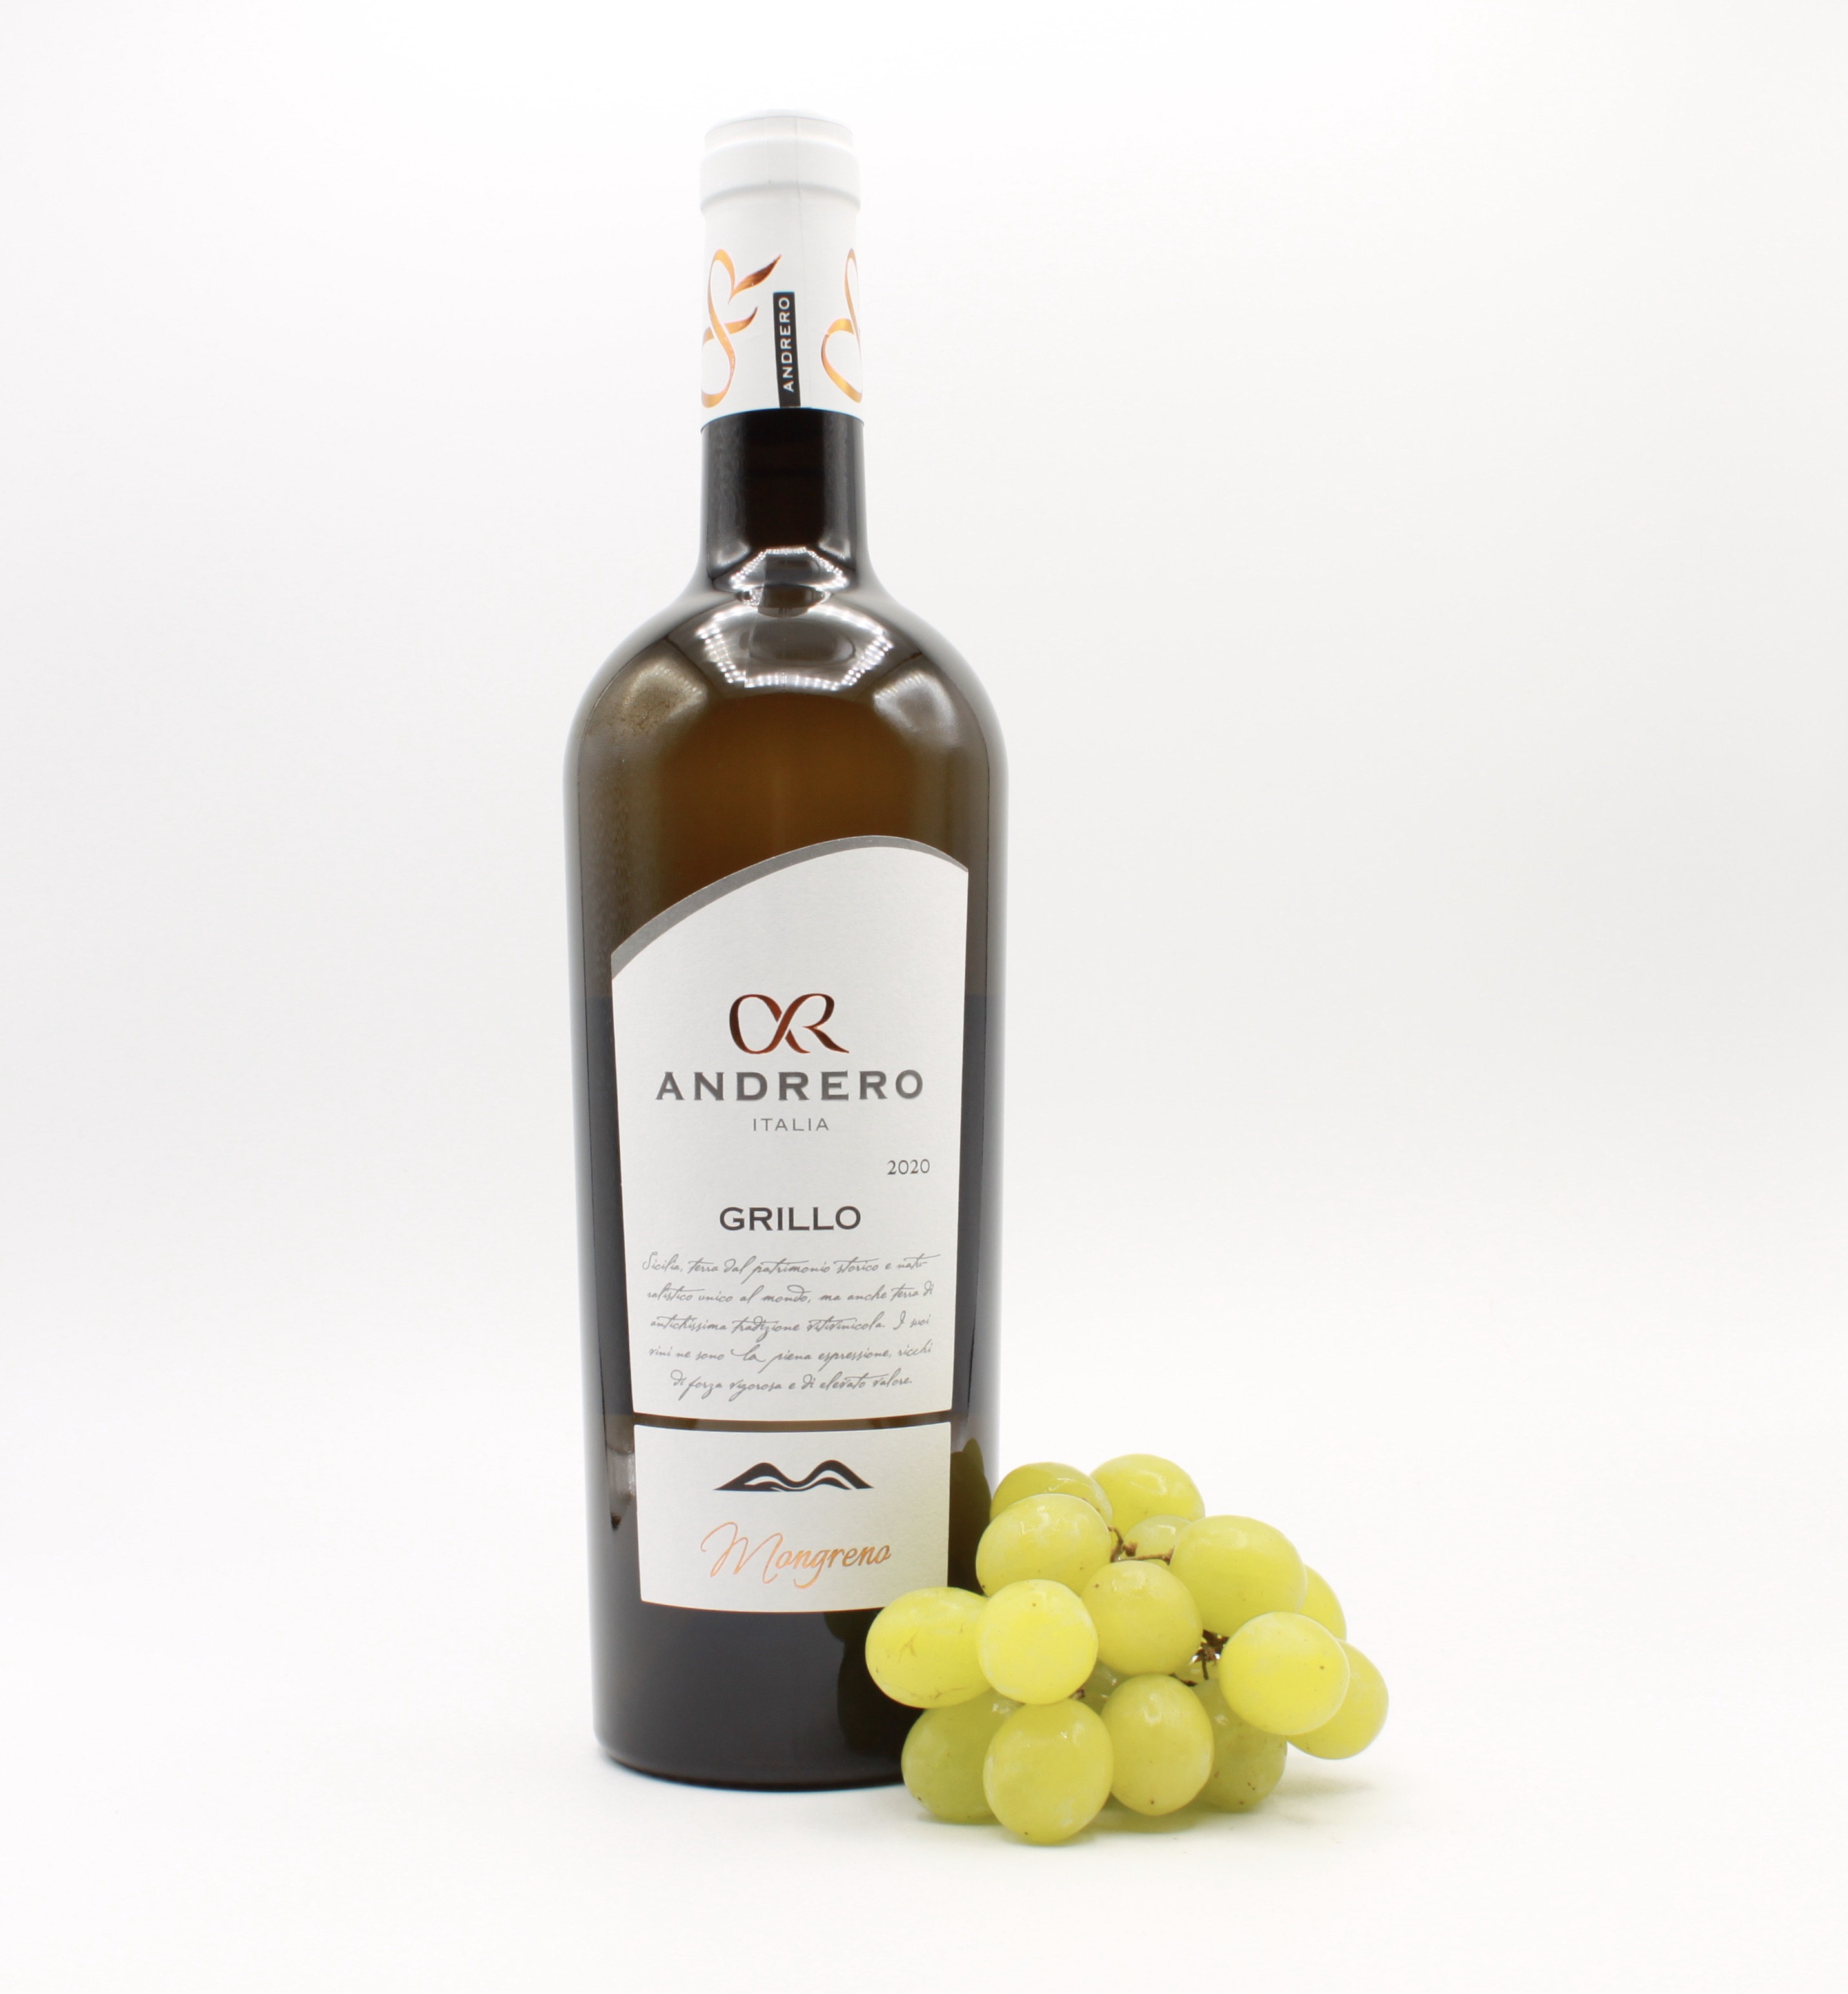 Grillo Mongreno - Andrero, Italienischer Weißwein